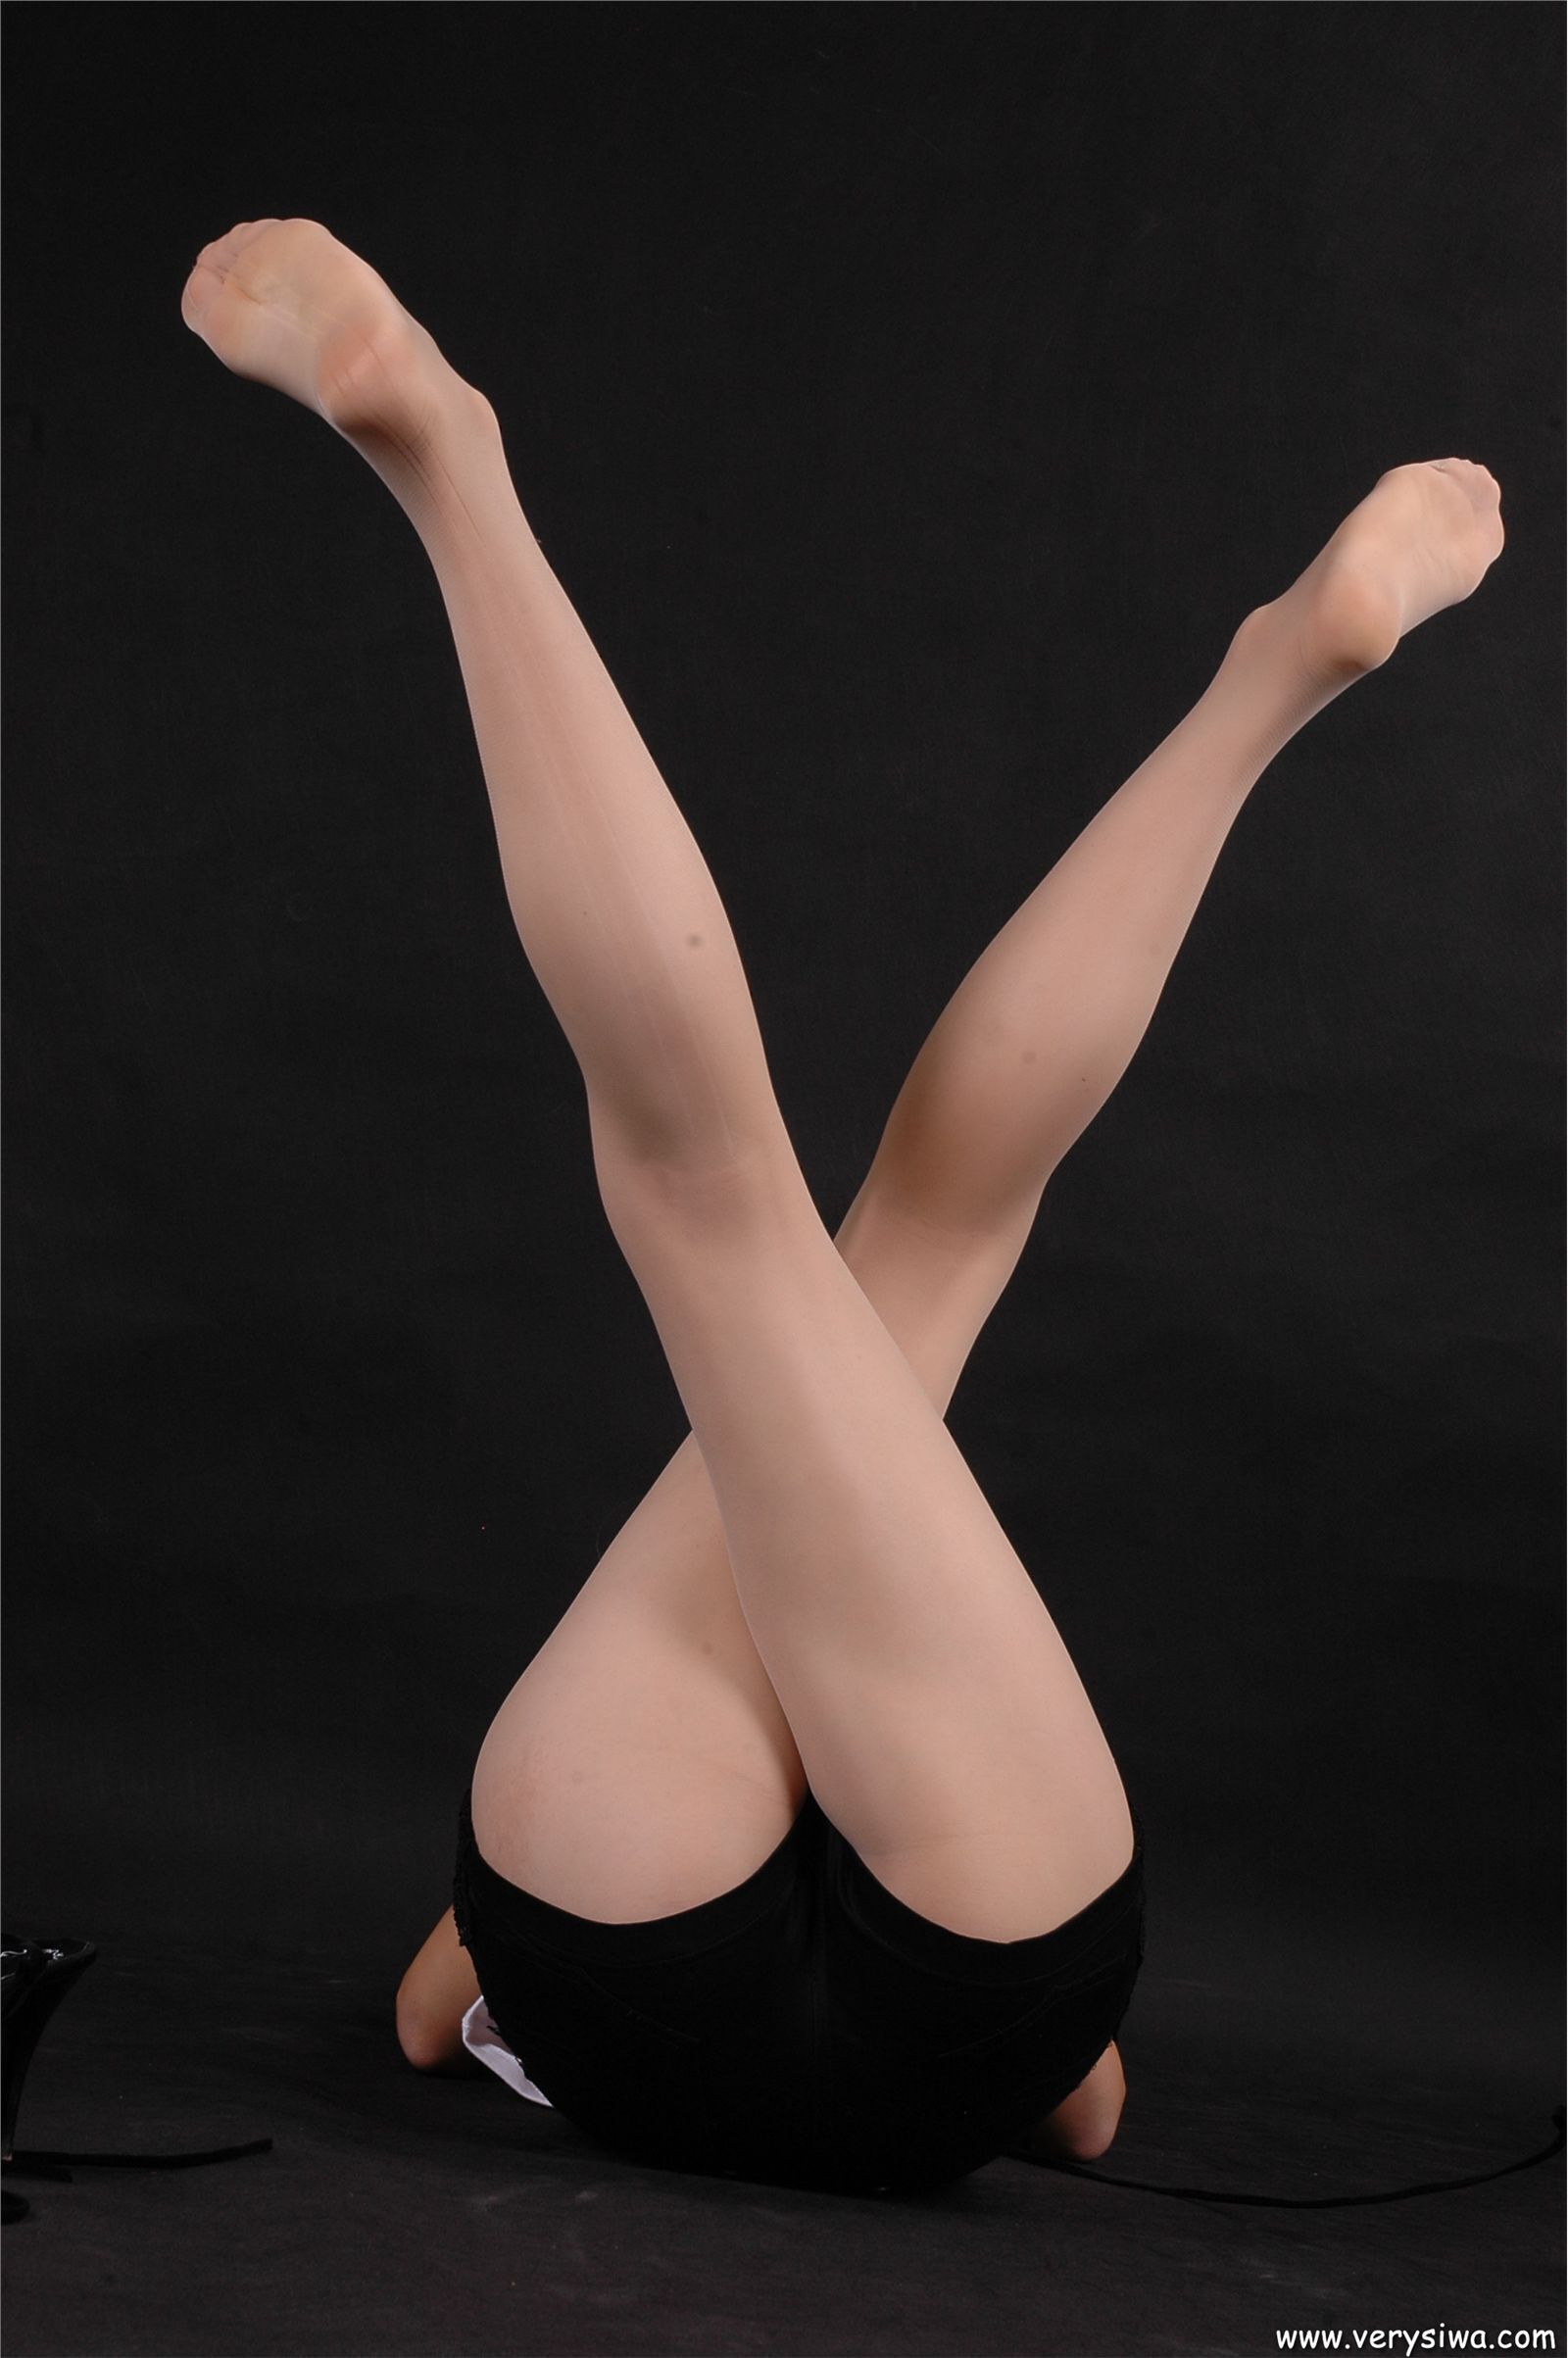 Zhonggaoyi silk stockings beauty model sexy pictures